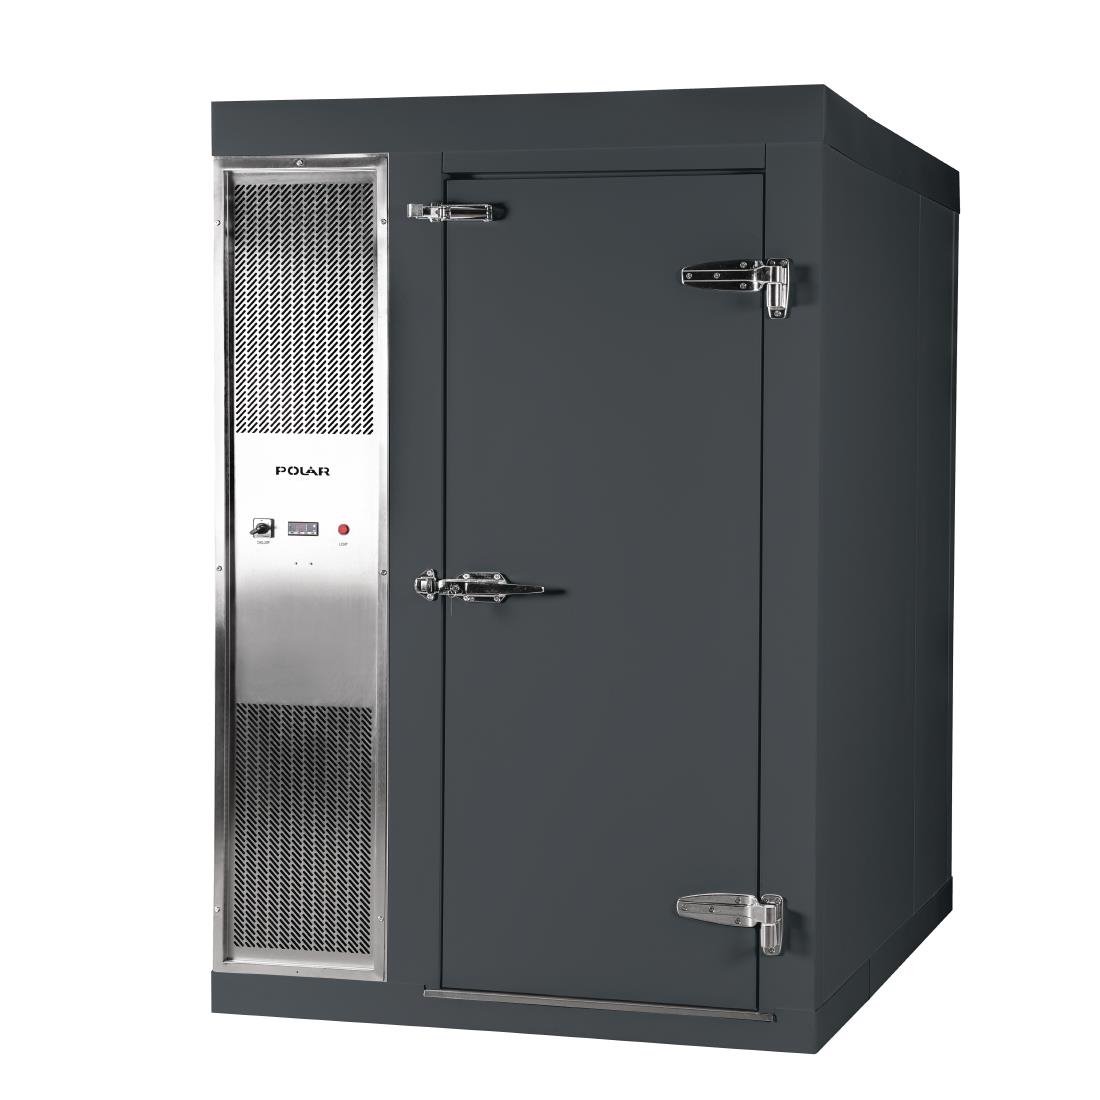 DS485-FGY Polar U-Series 1.8 x 1.8m Integral Walk In Freezer Room Grey JD Catering Equipment Solutions Ltd